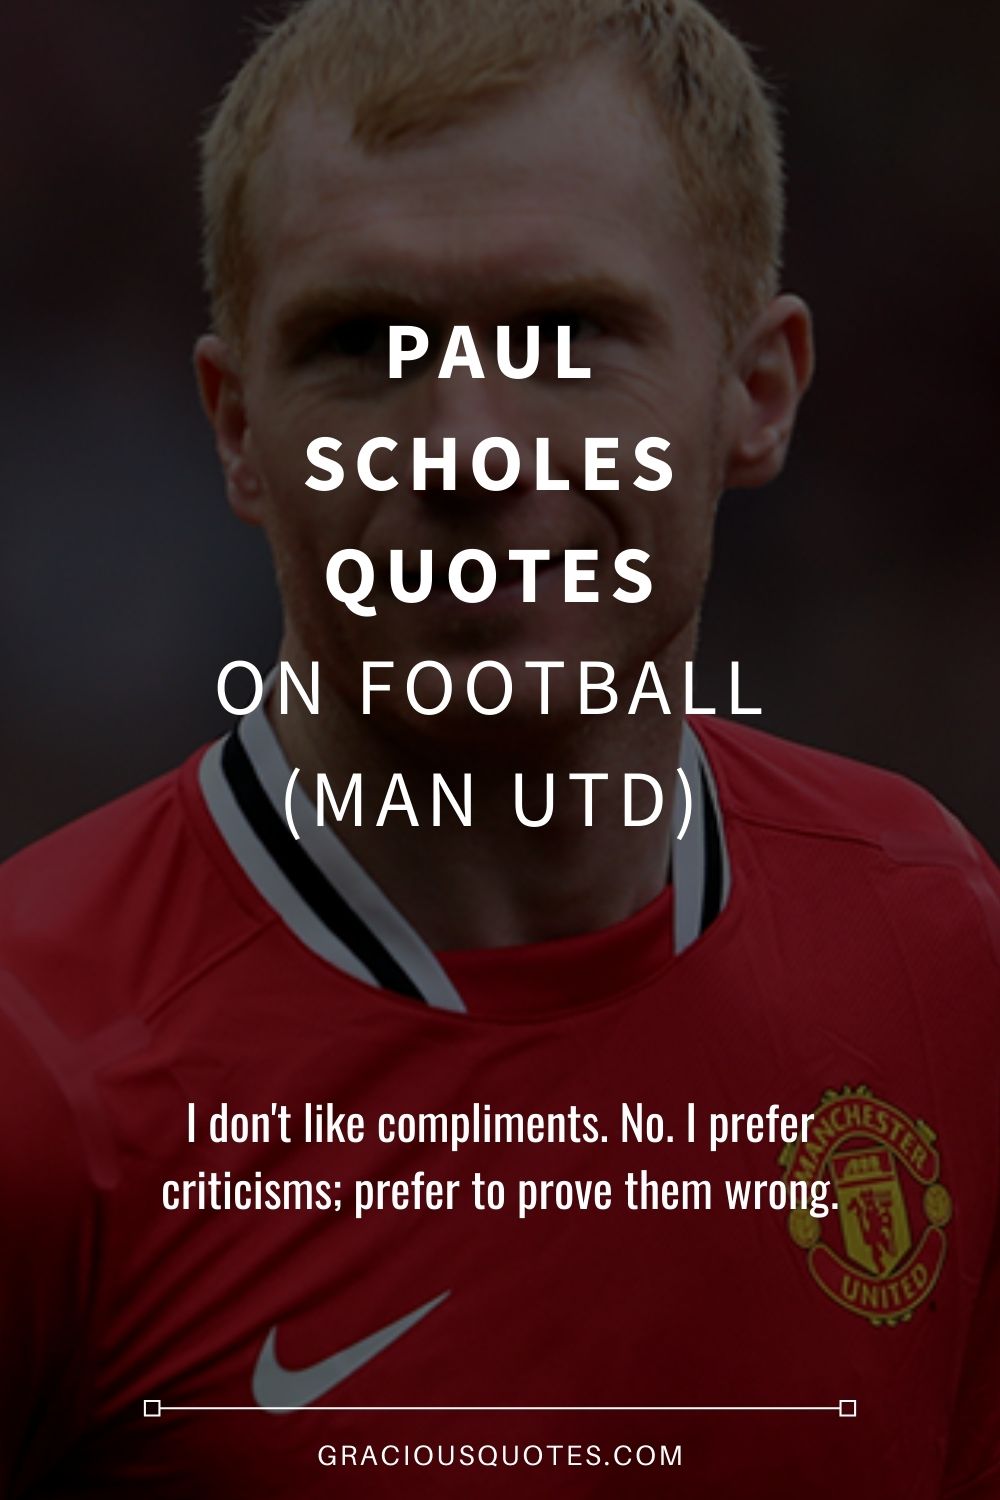 Paul Scholes Quotes on Football (MAN UTD) - Gracious Quotes